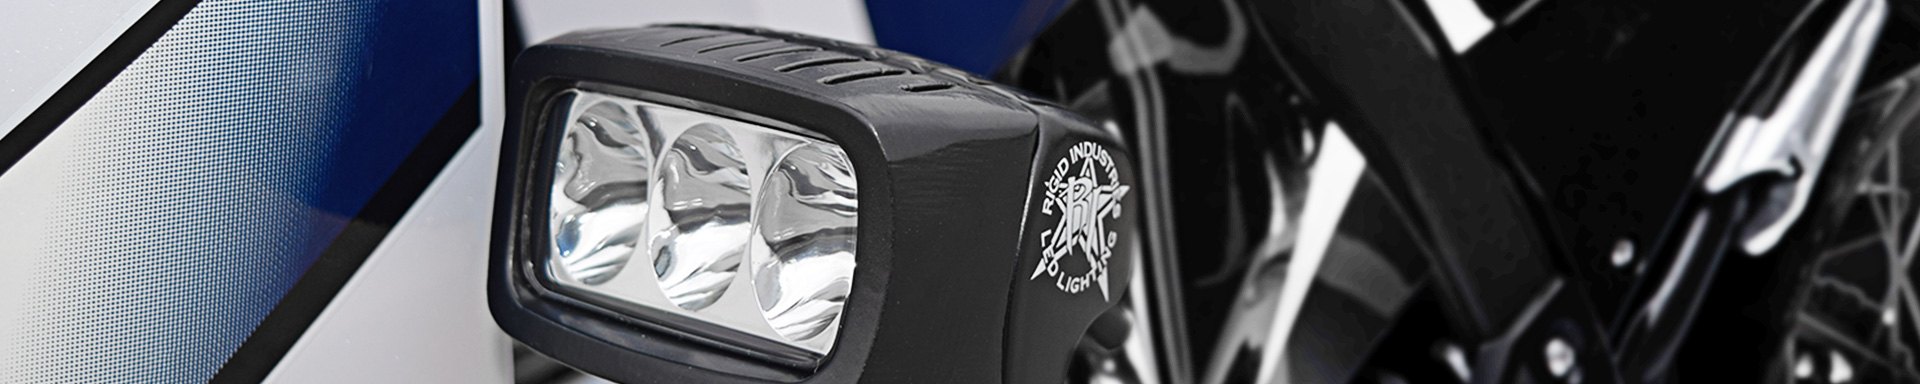 Rigid Industries Motorcycle Headlights